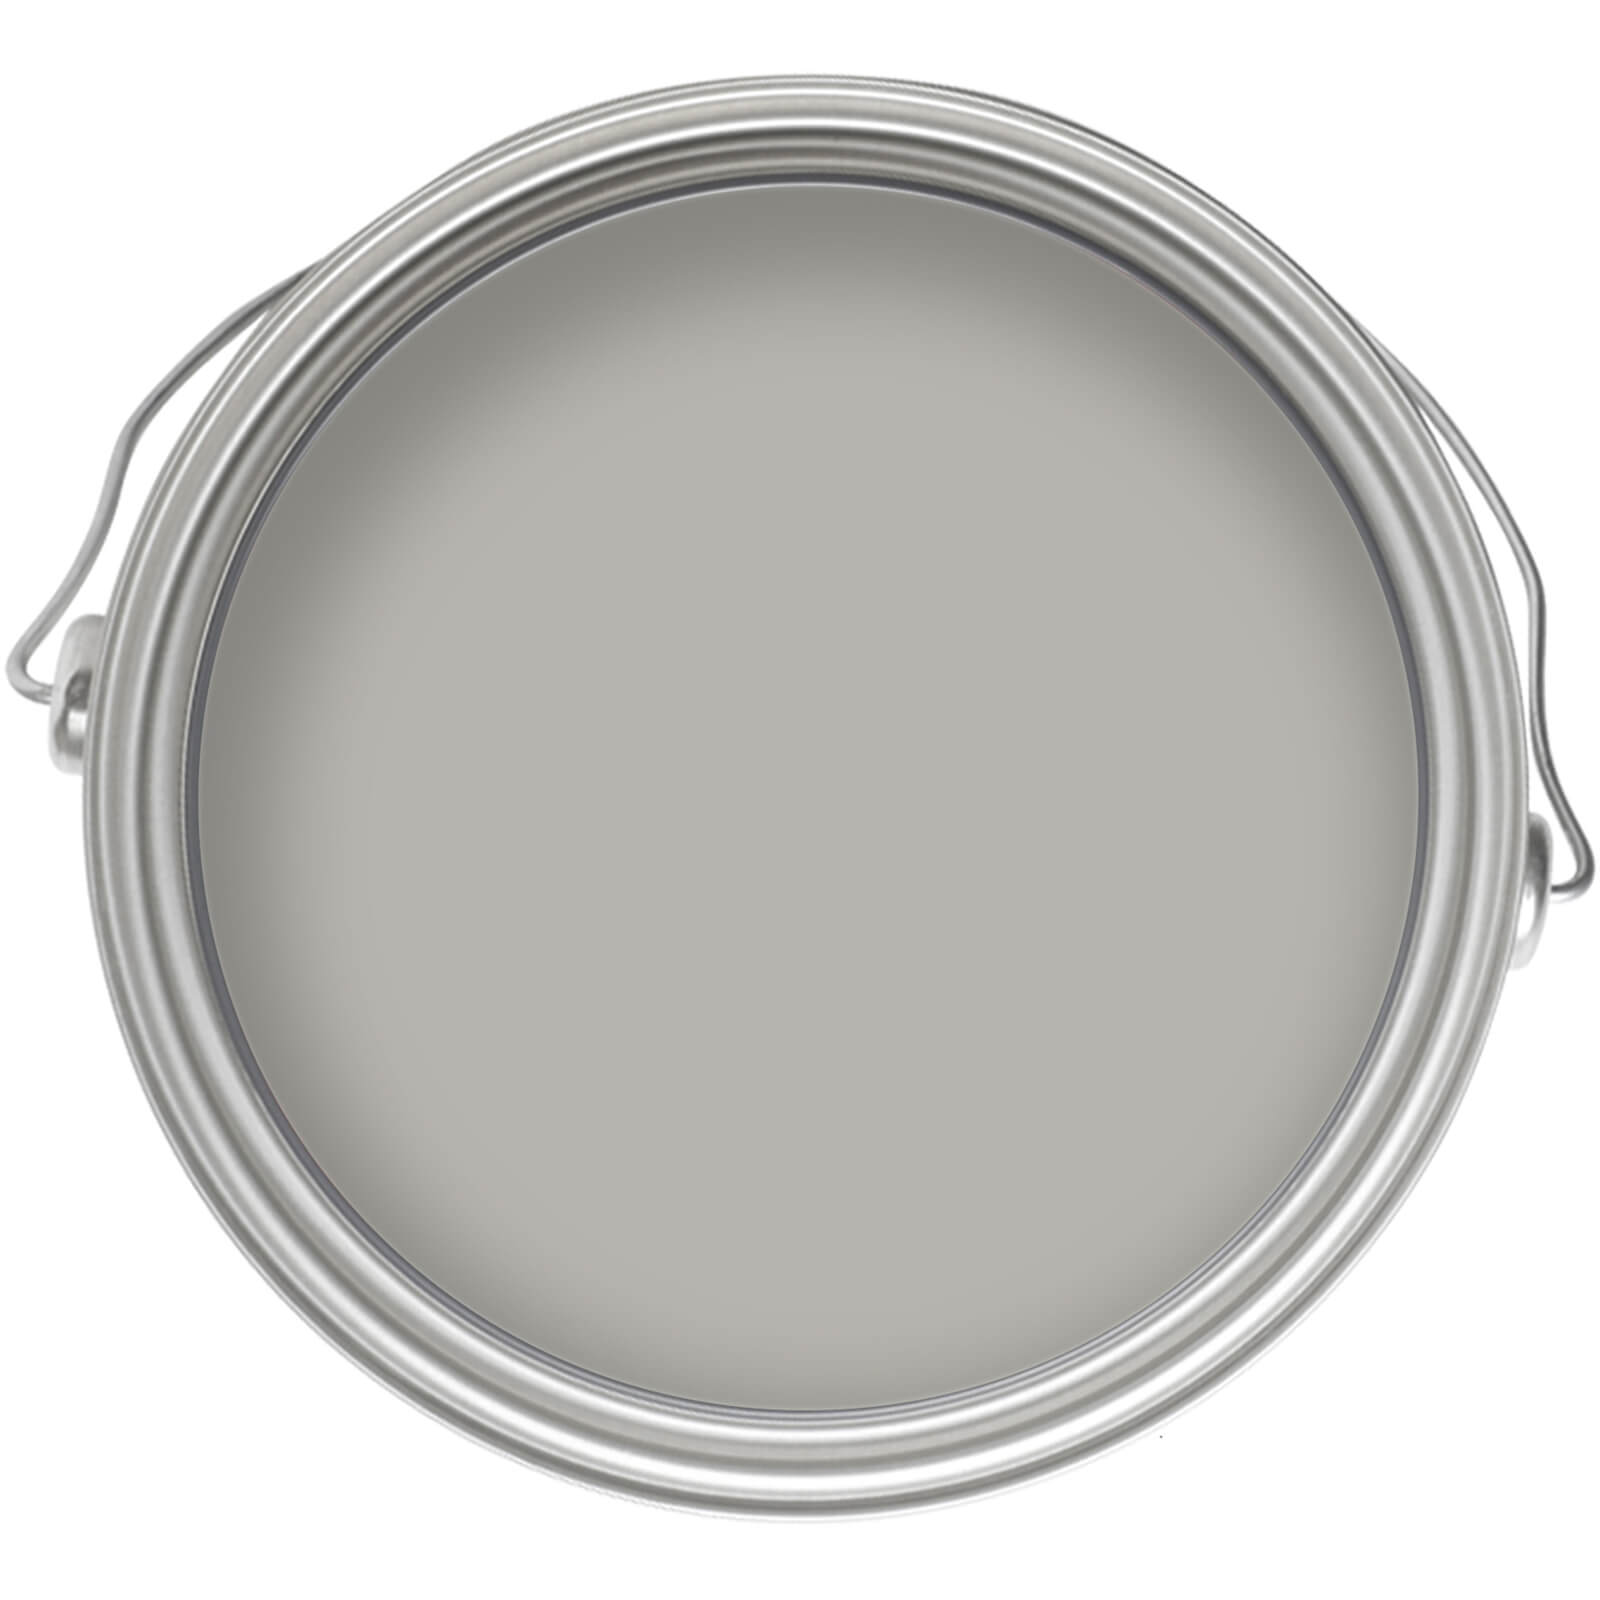 Homebase Smooth Masonry Paint - Graphite Grey 5L